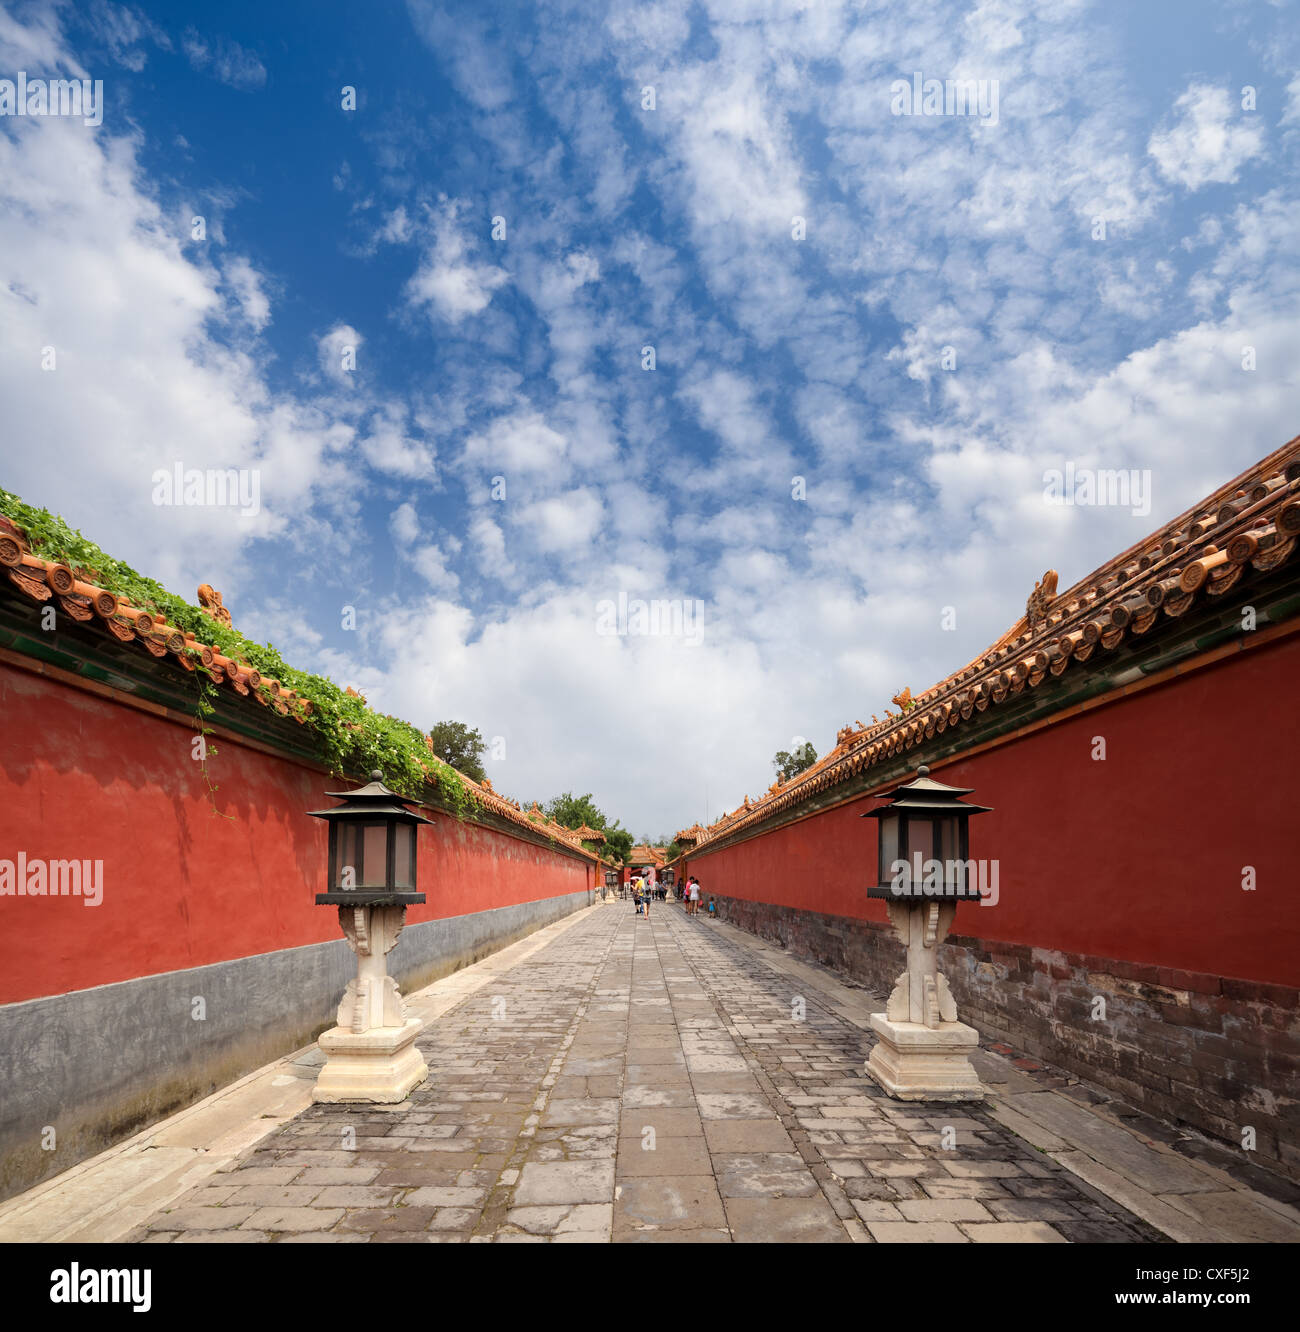 the forbidden city's walls Stock Photo